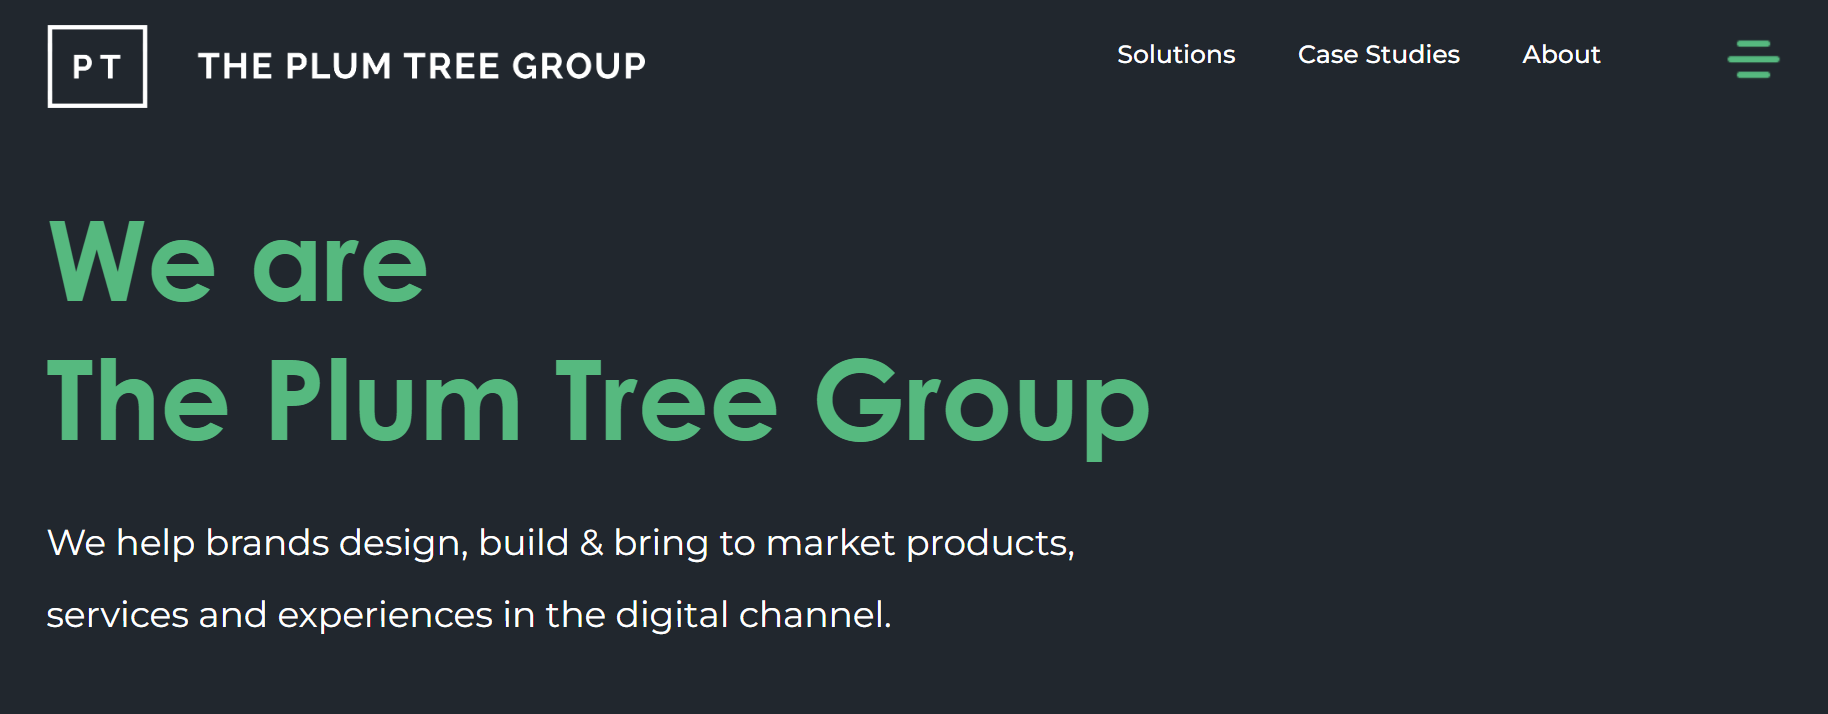 Plum Tree Group